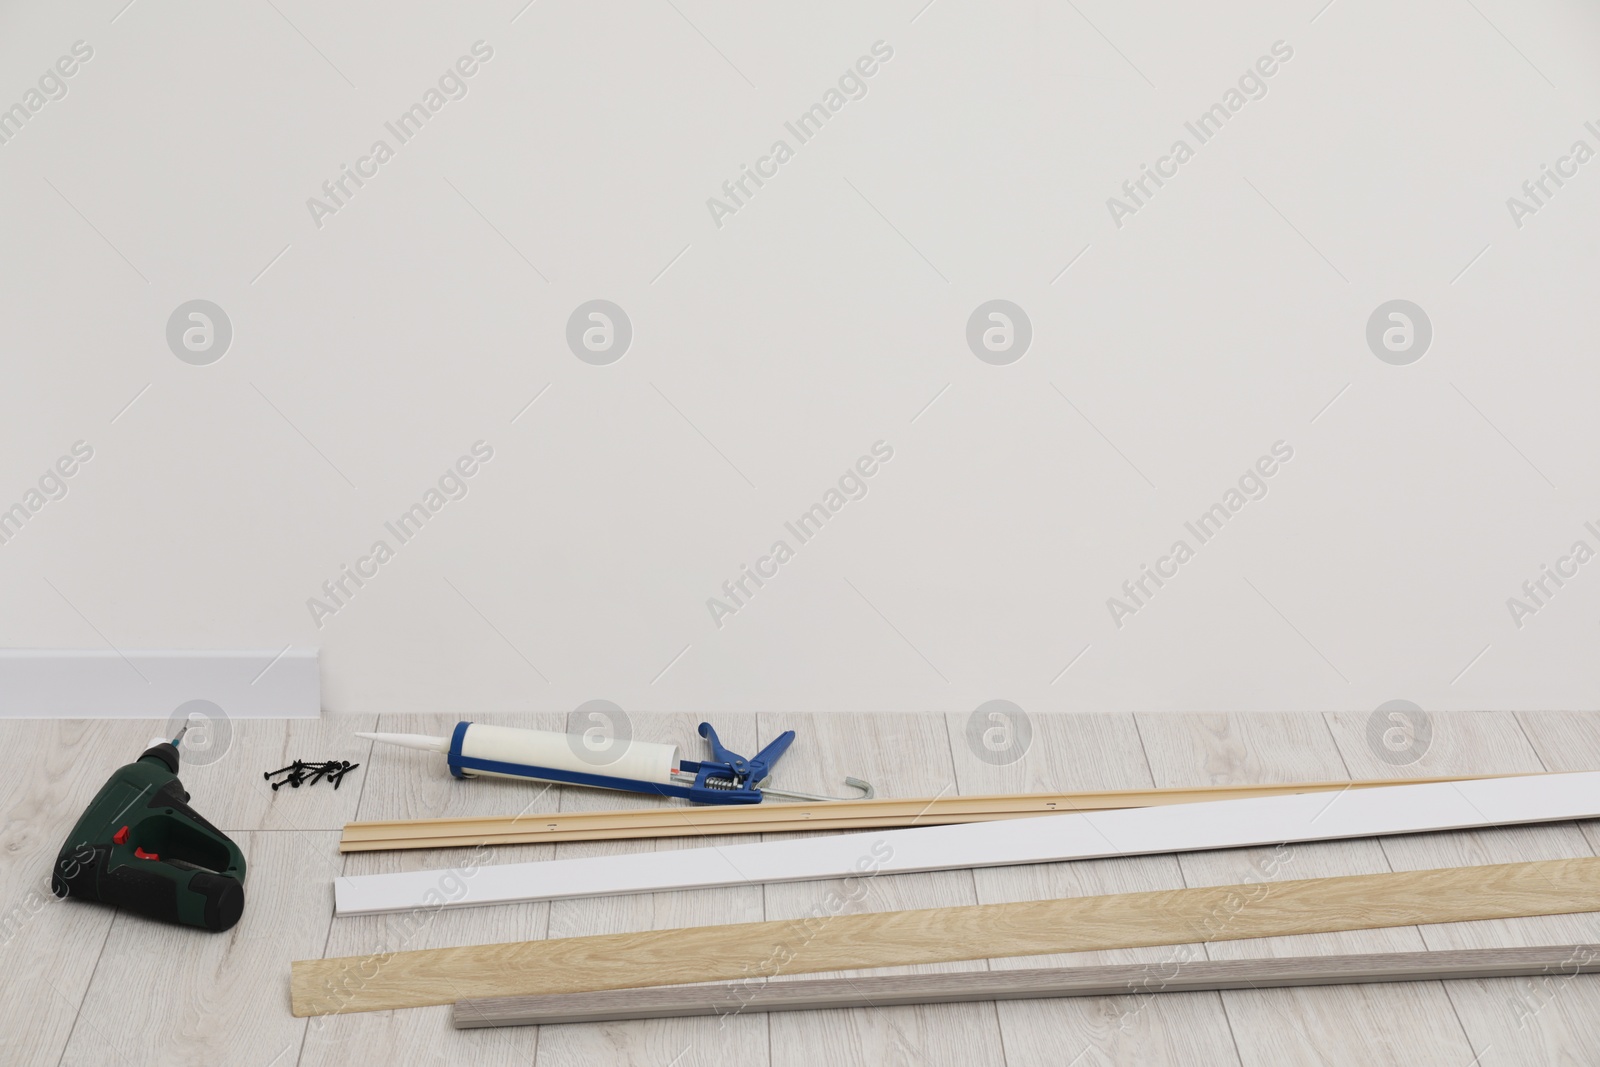 Photo of Plinths, caulking gun, screwdriver and screws on laminated floor in room